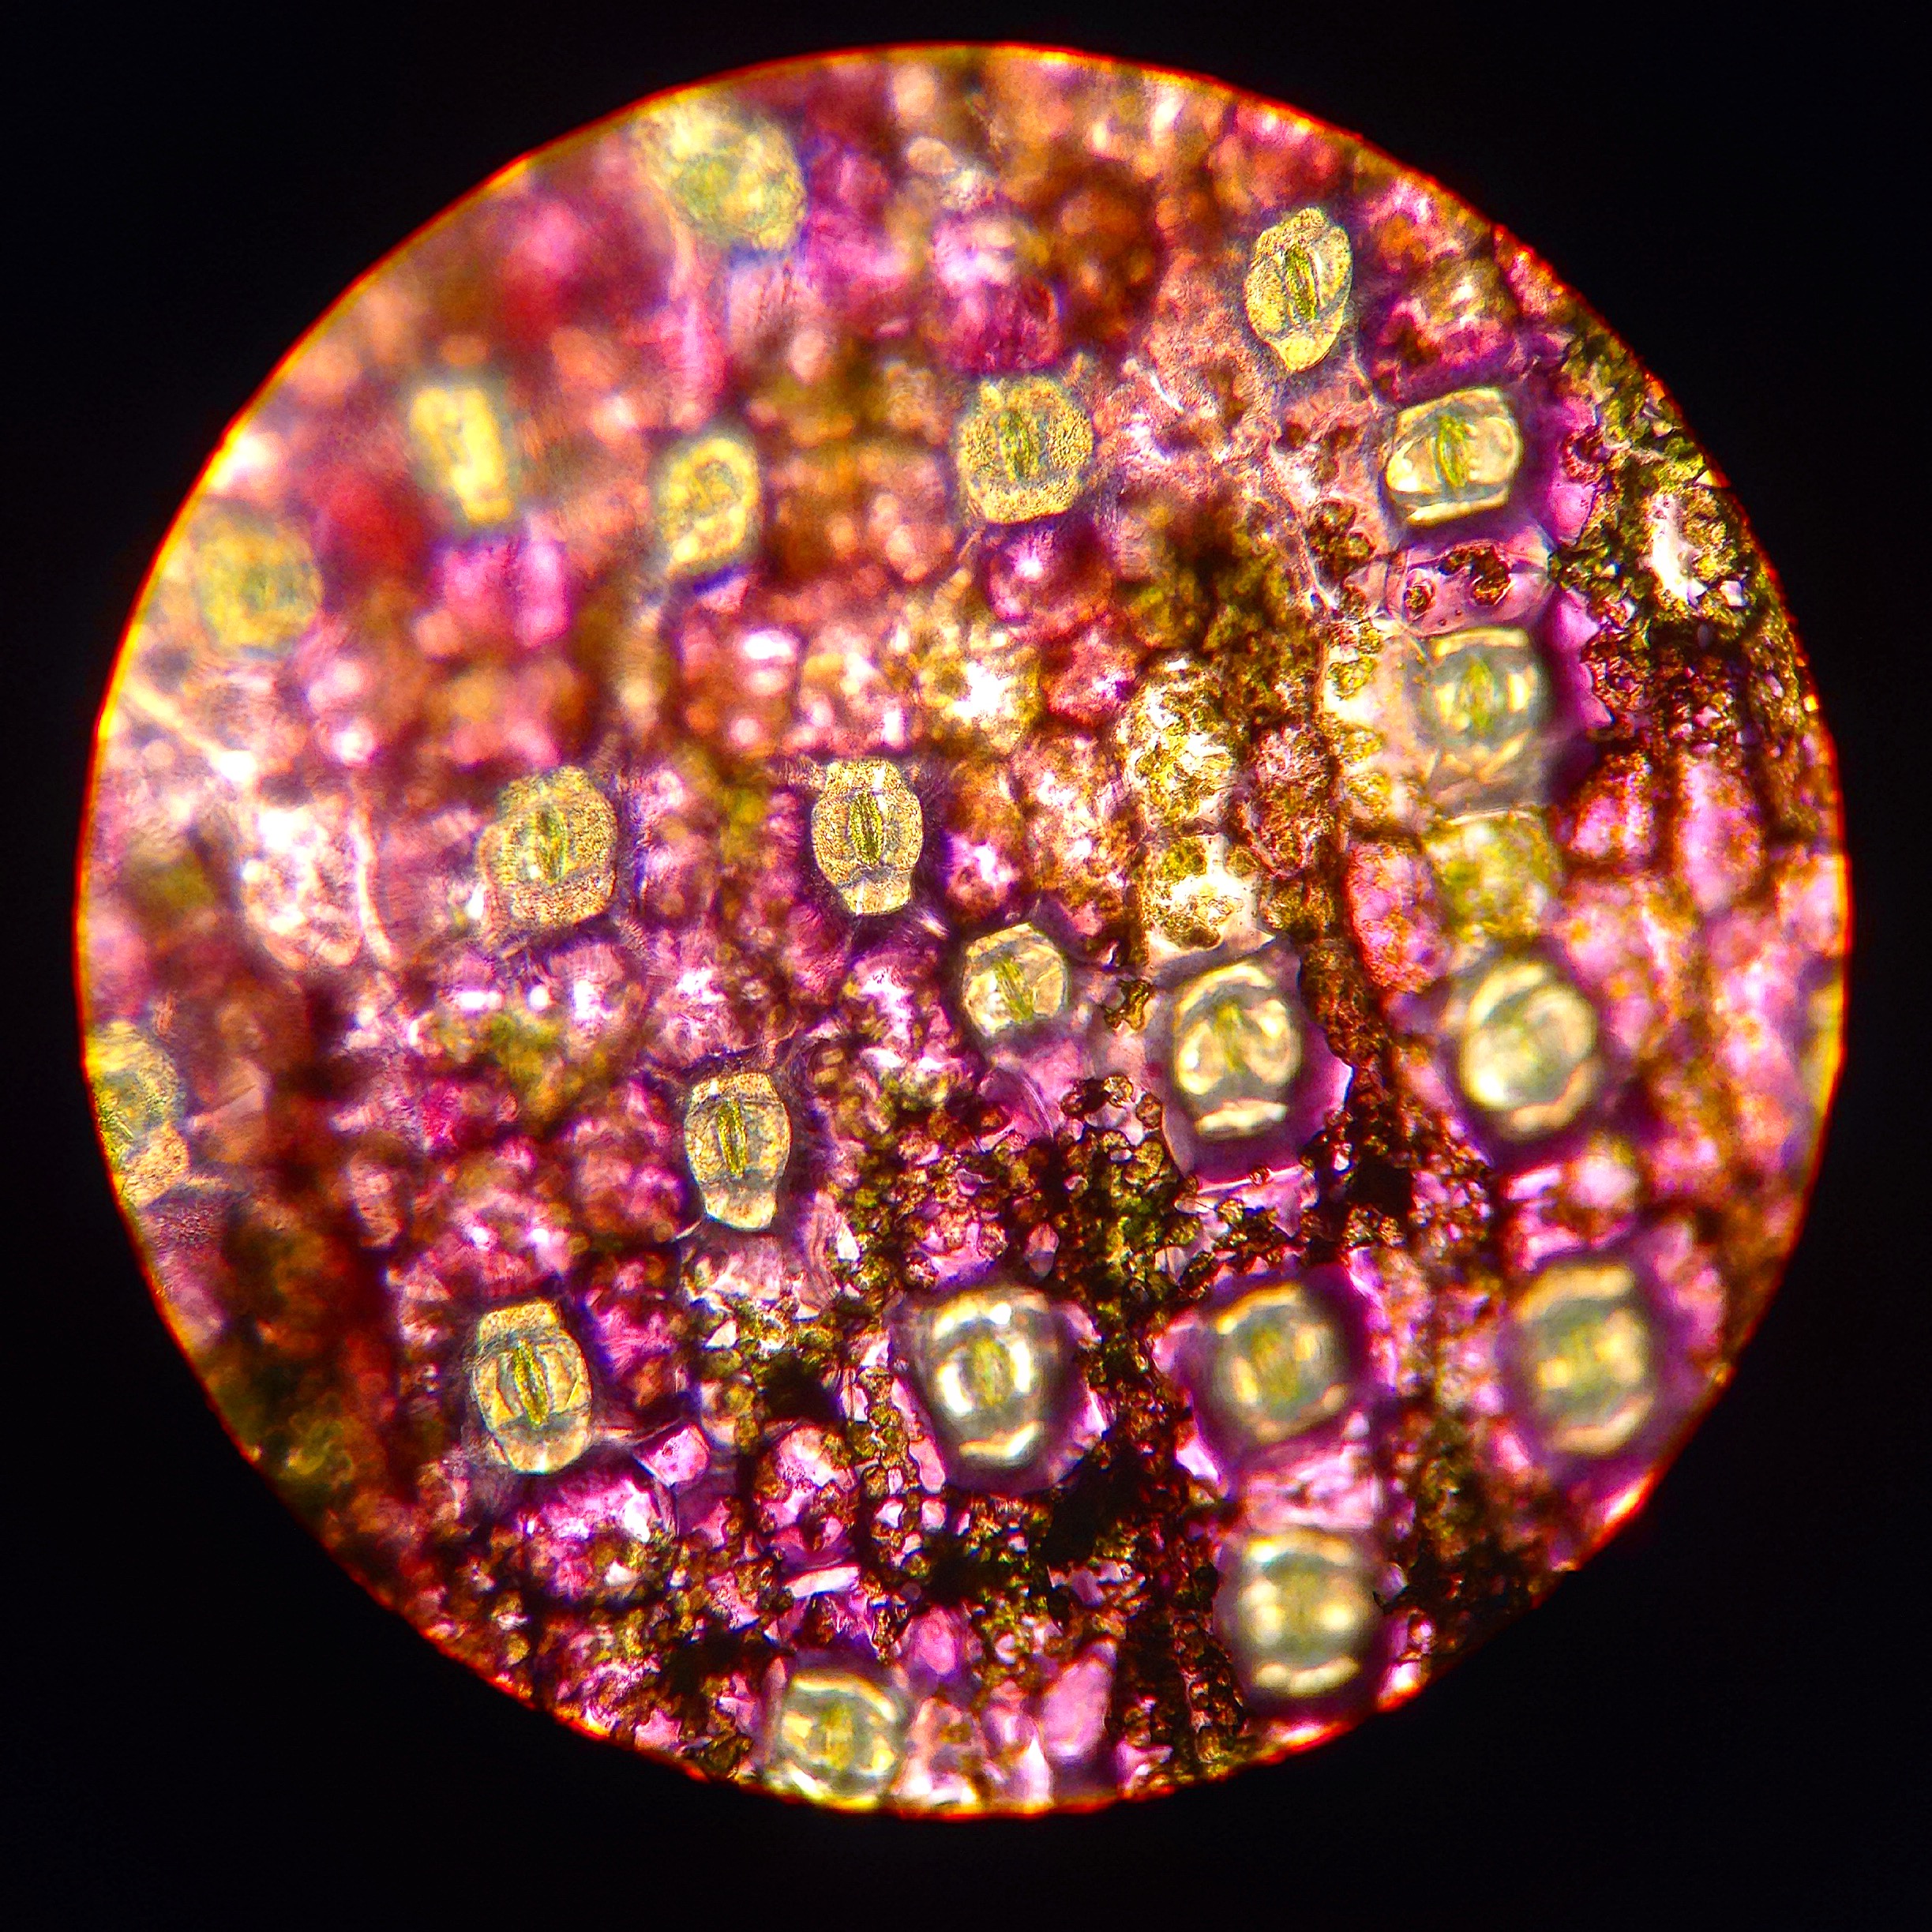 Cuticle microscopical